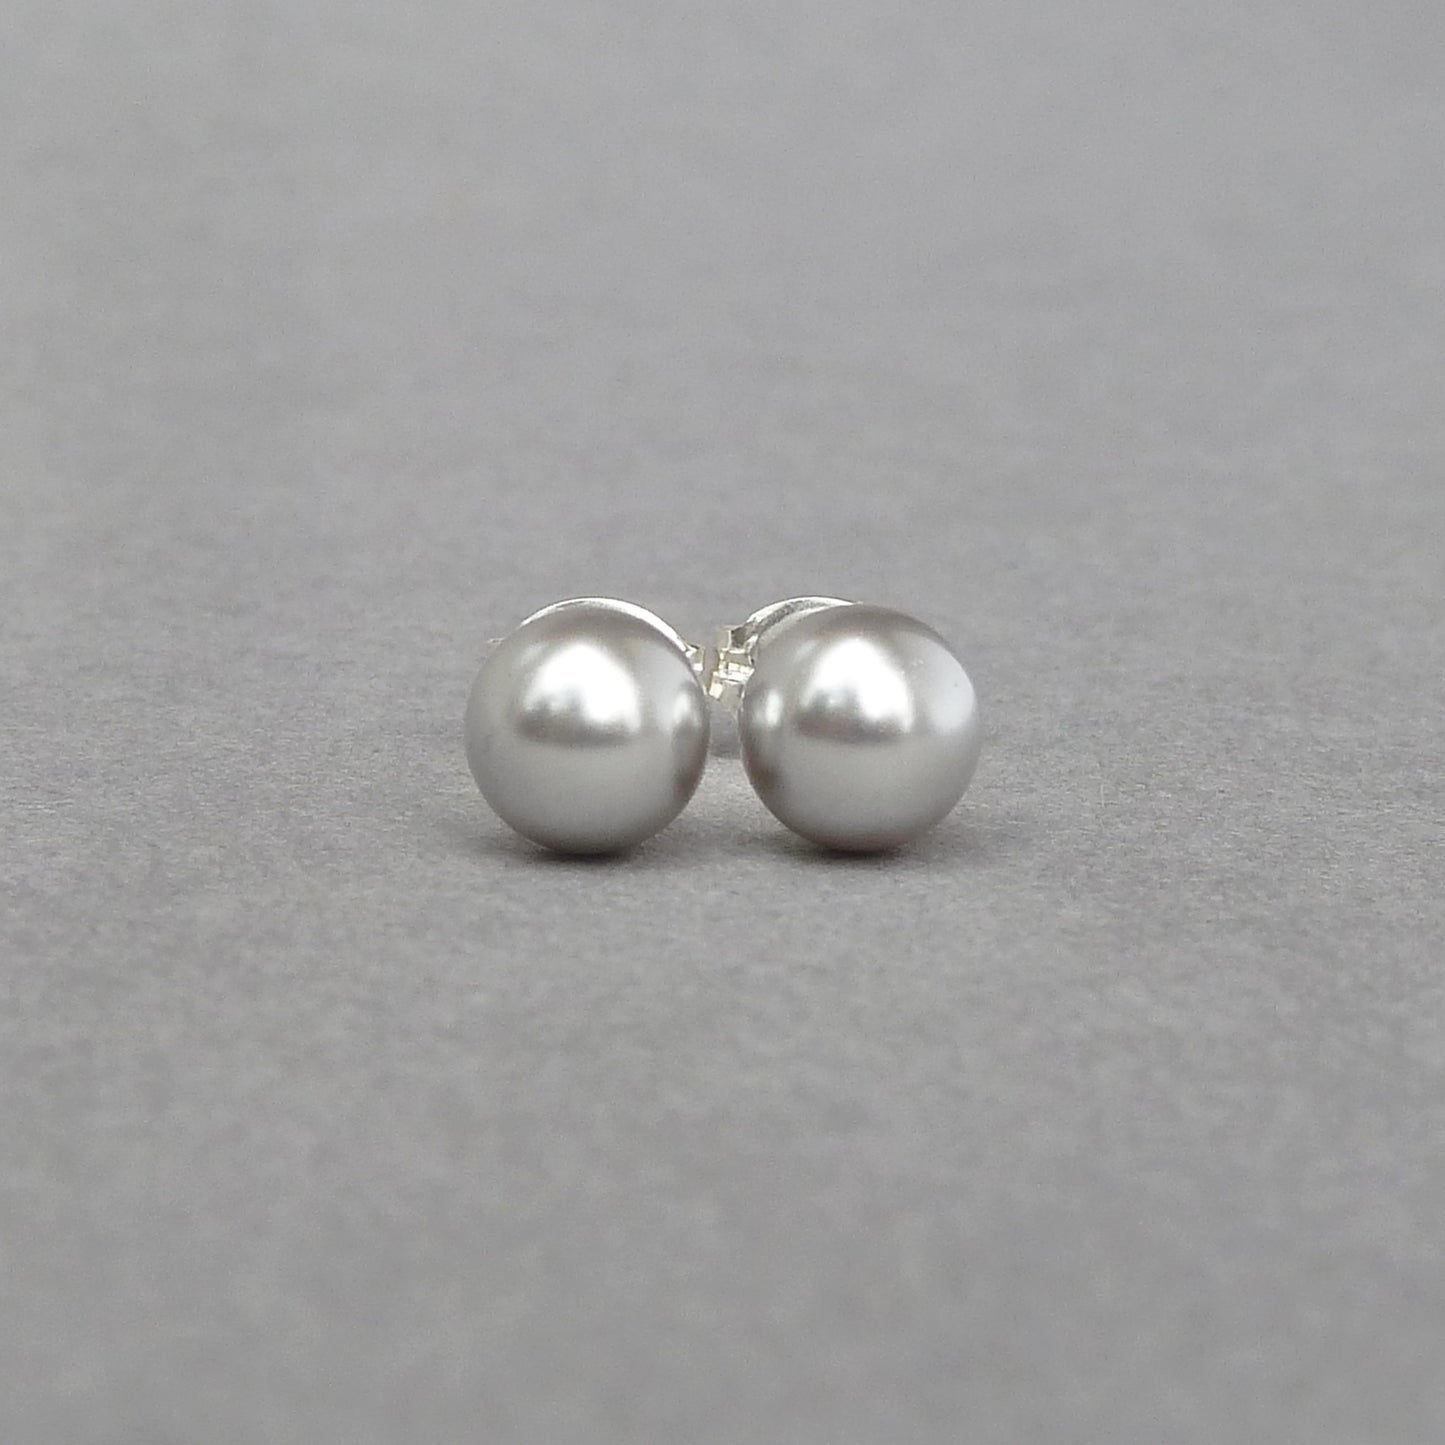 Round light grey pearl stud earrings